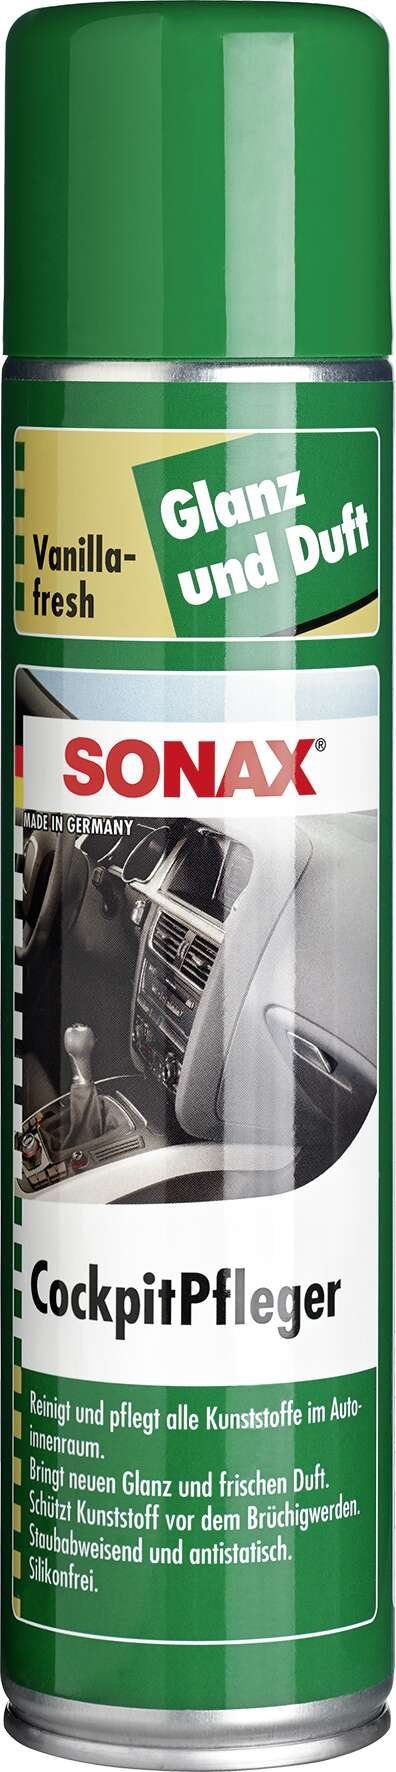 SONAX Cockpit care 400 ml Vanilla-fresh spray can